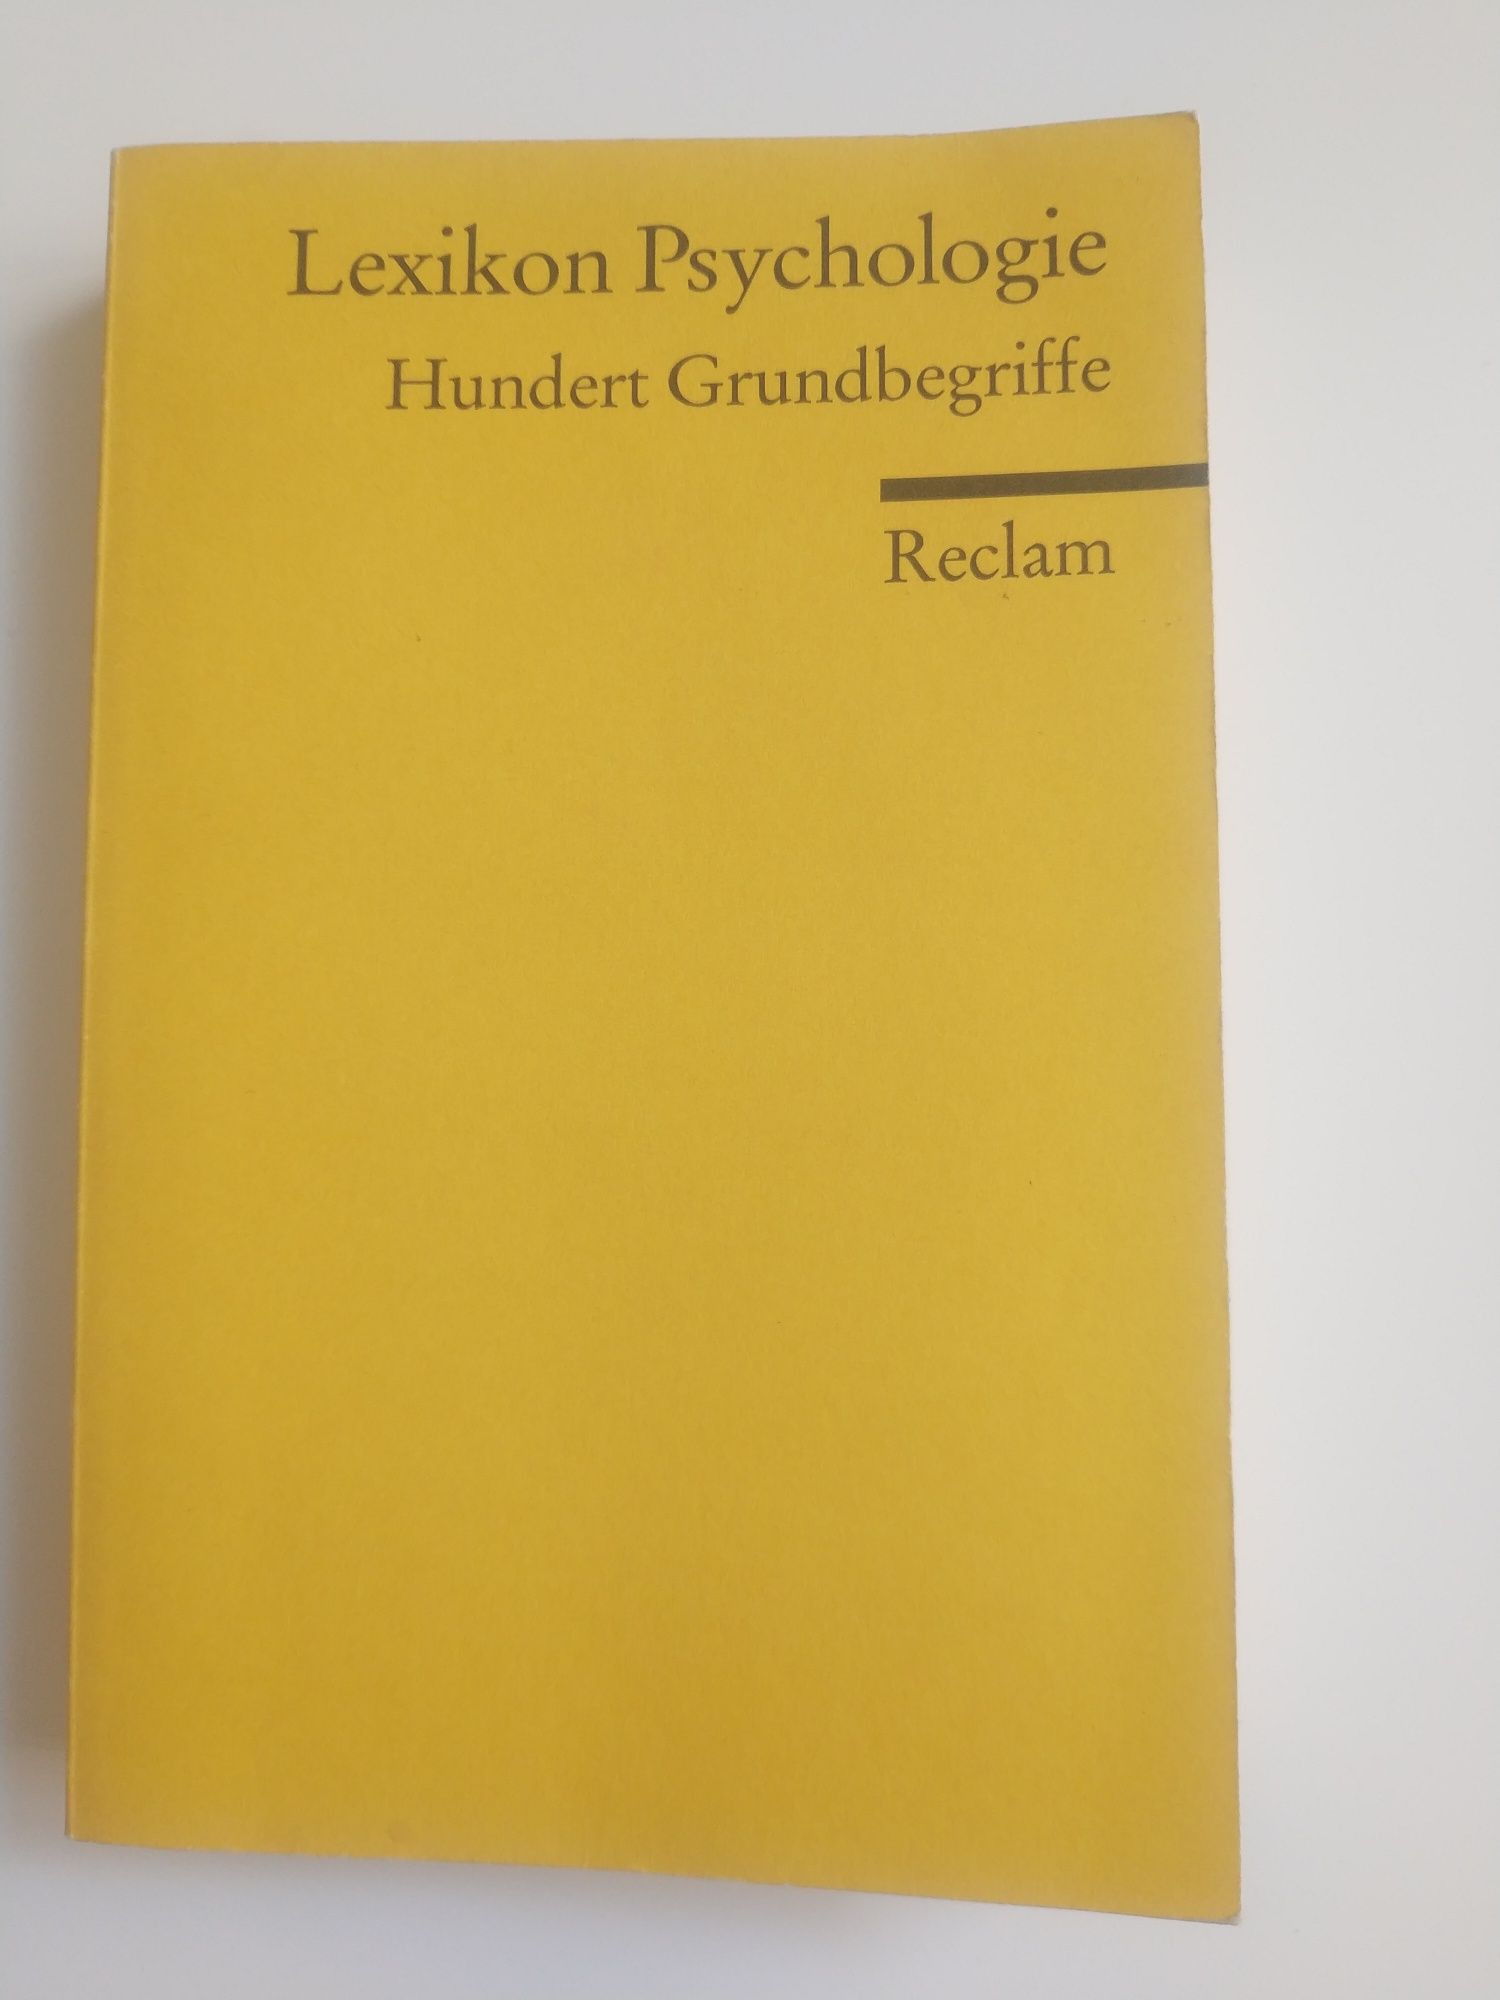 Książka Lexikon Psychologie Hundert Grundbegriffe po niemiecku